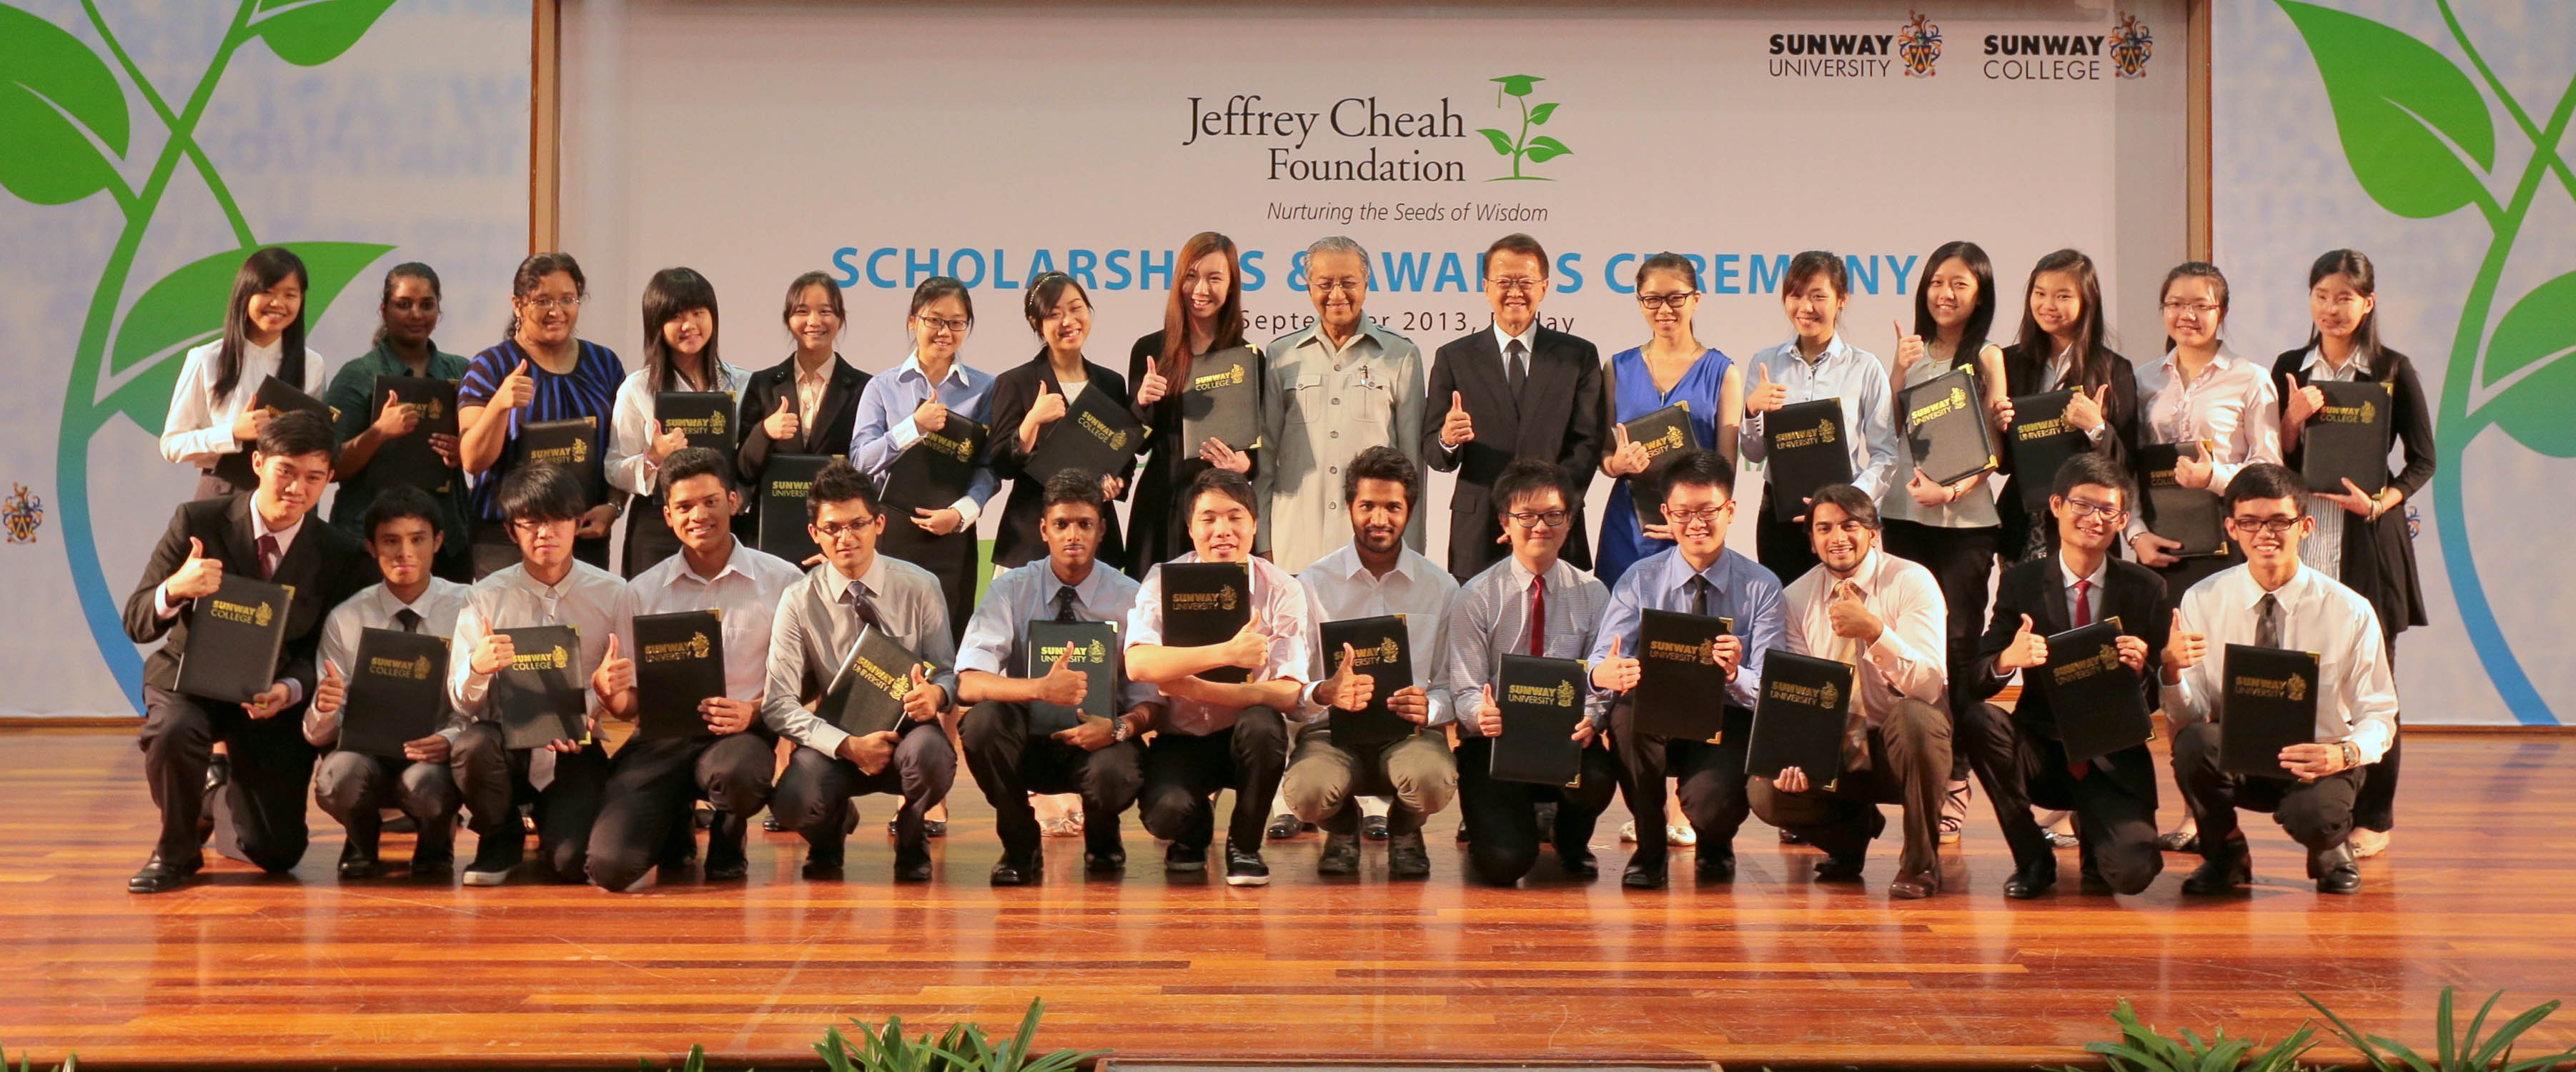 Jeffrey cheah foundation scholarship